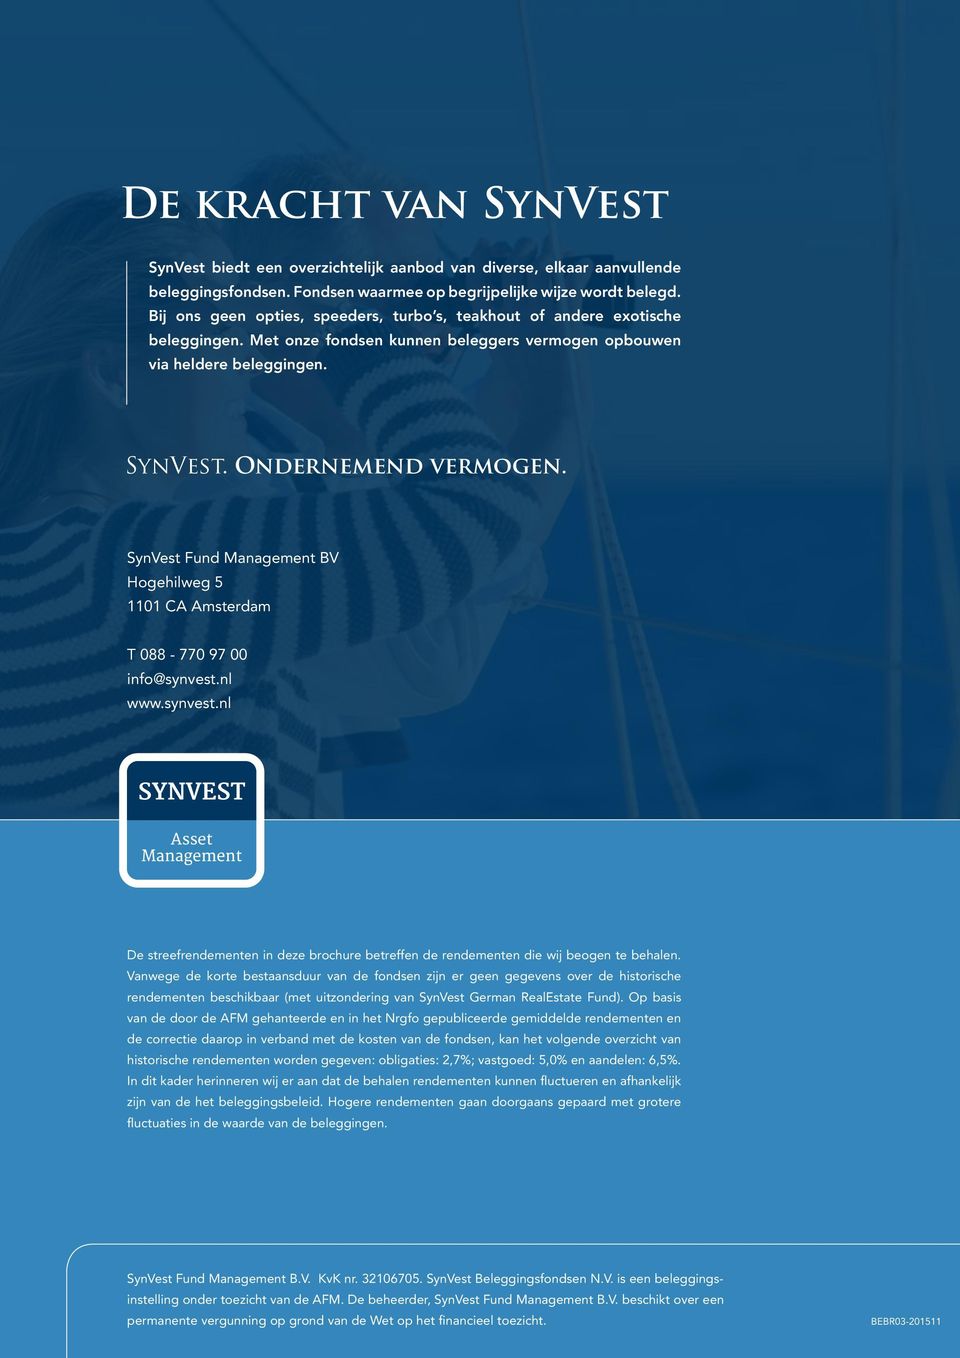 SynVest Fund Management BV Hogehilweg 5 1101 CA Amsterdam T 088-770 97 00 info@synvest.nl www.synvest.nl De streefrendementen in deze brochure betreffen de rendementen die wij beogen te behalen.